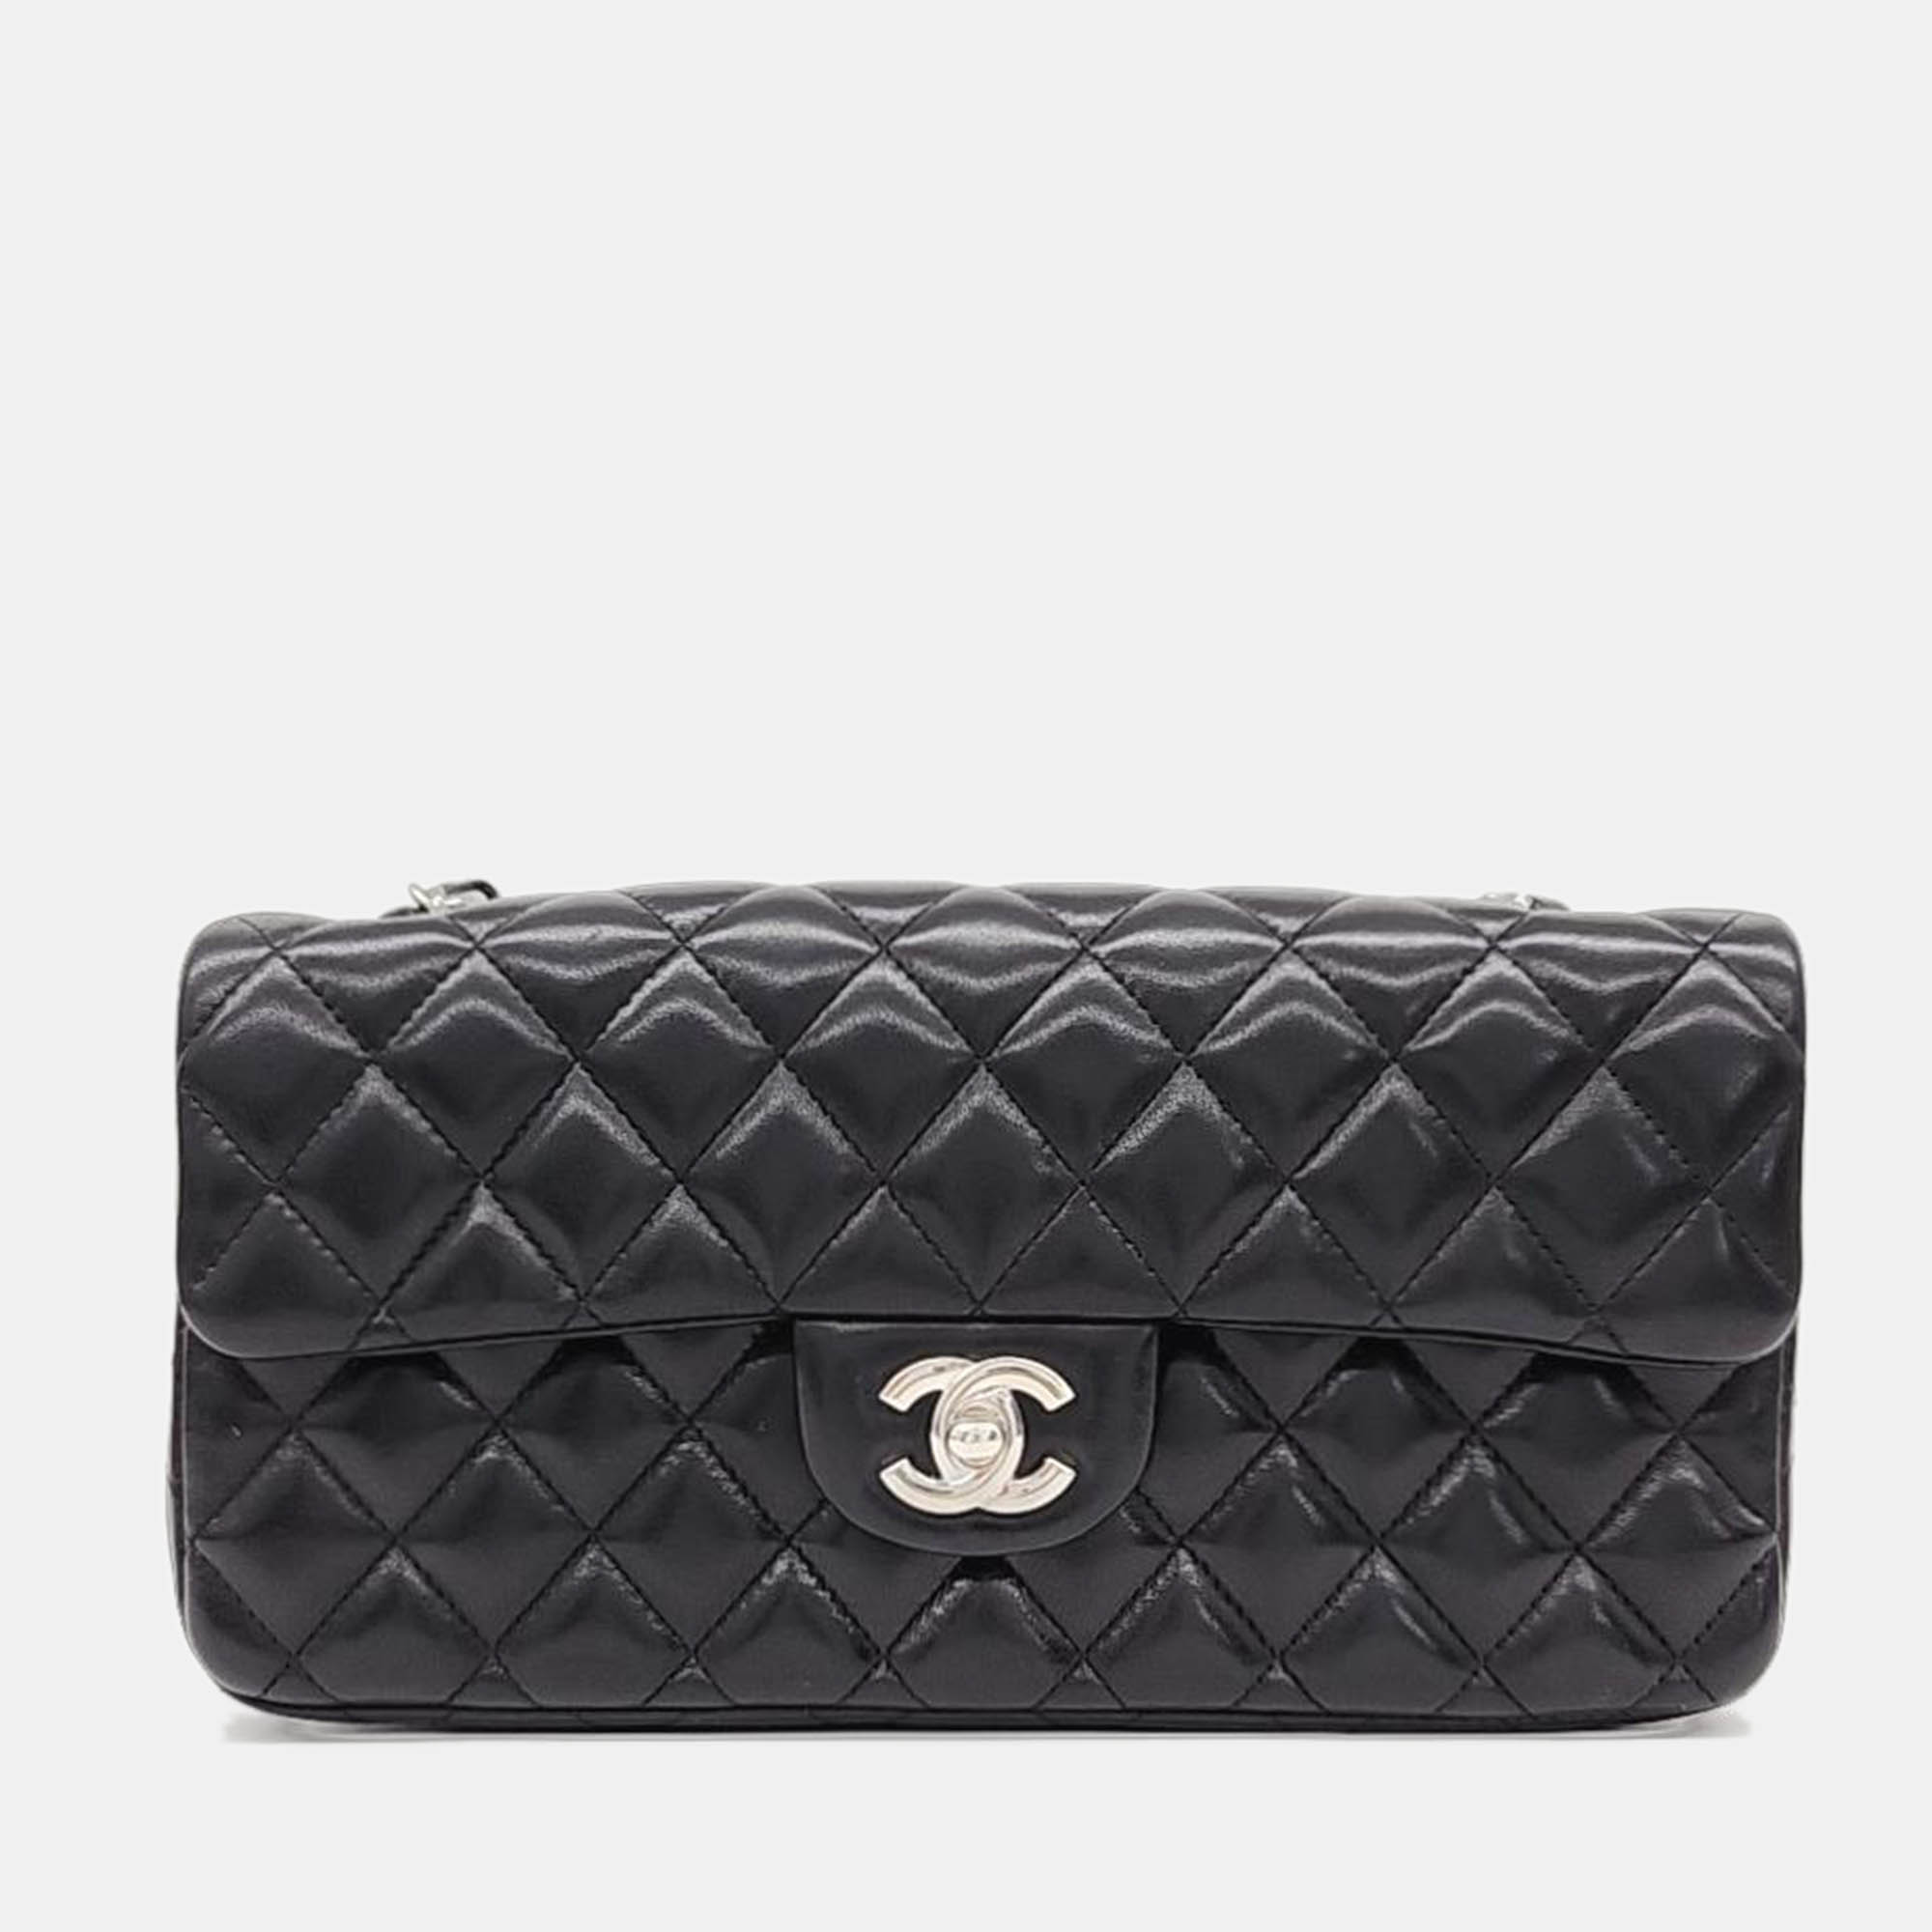 Chanel black lambskin new classic baguette bag